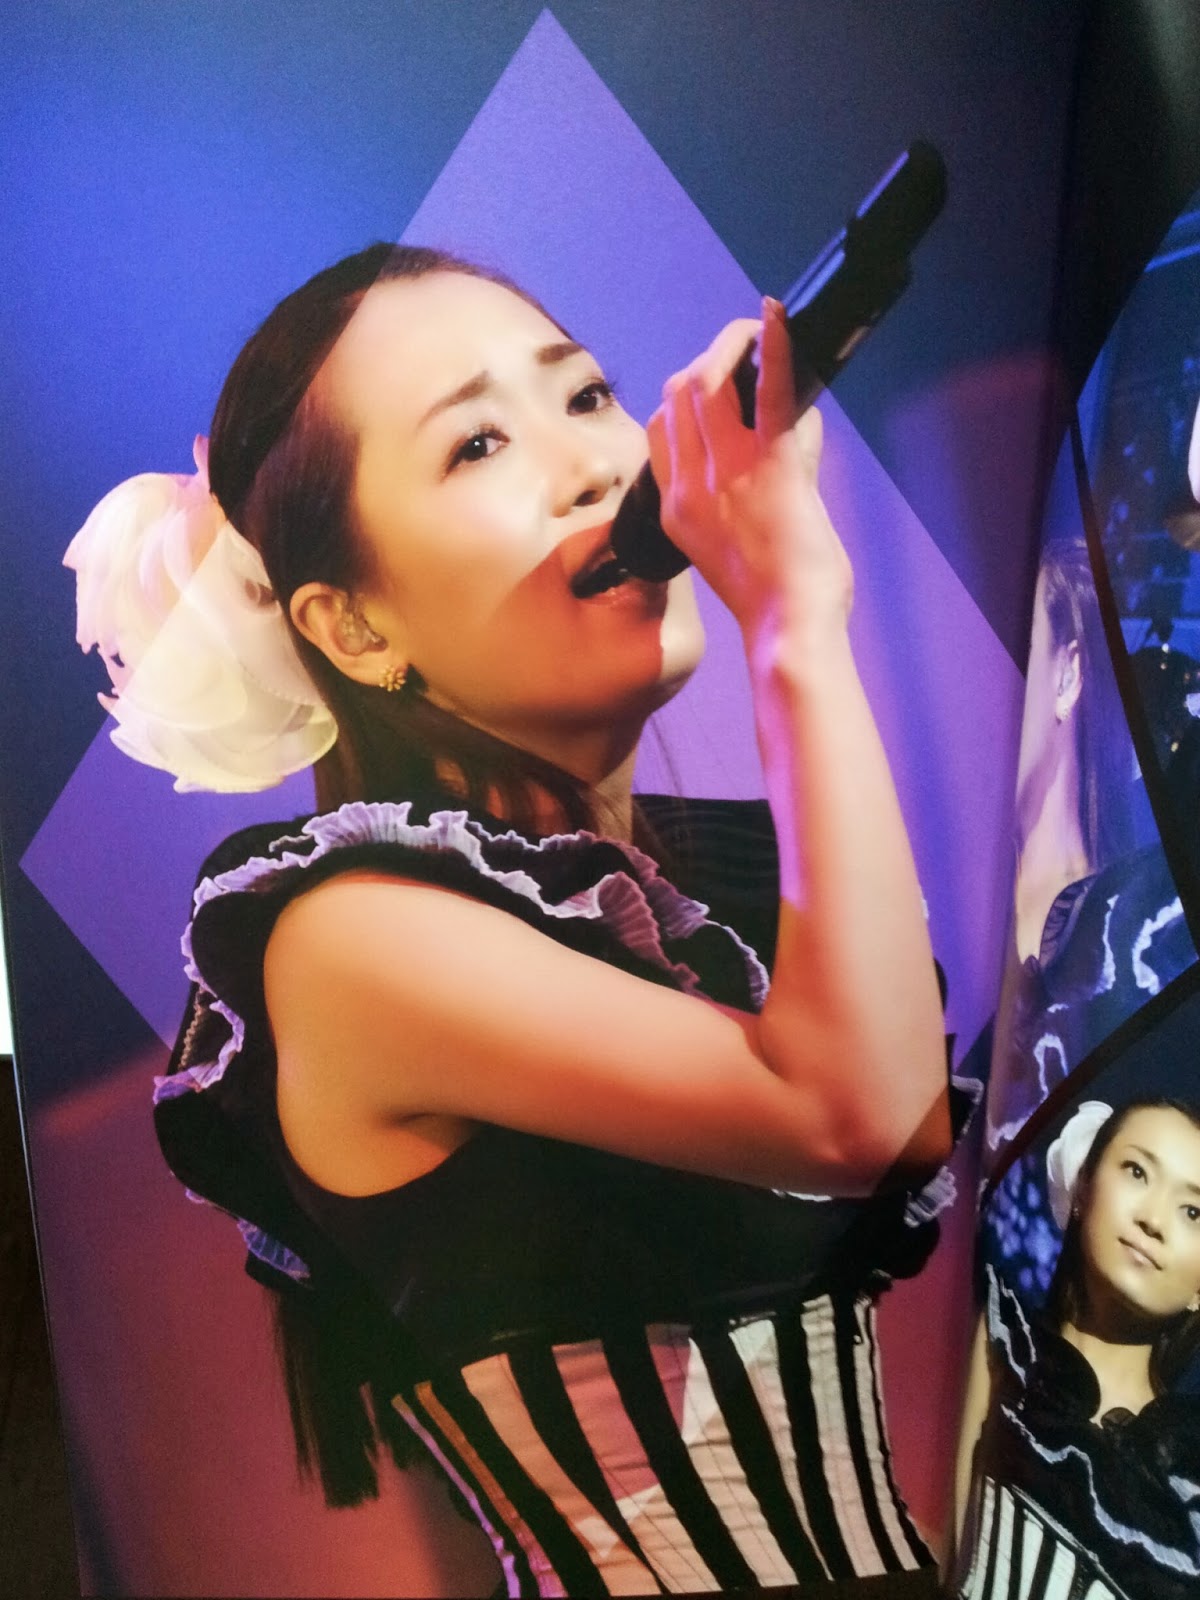 Just Me Yuki Kajiura Live Vol 11 Elemental Tour 14 Fictionjunction Yuuka 2days Special Live Book Photos